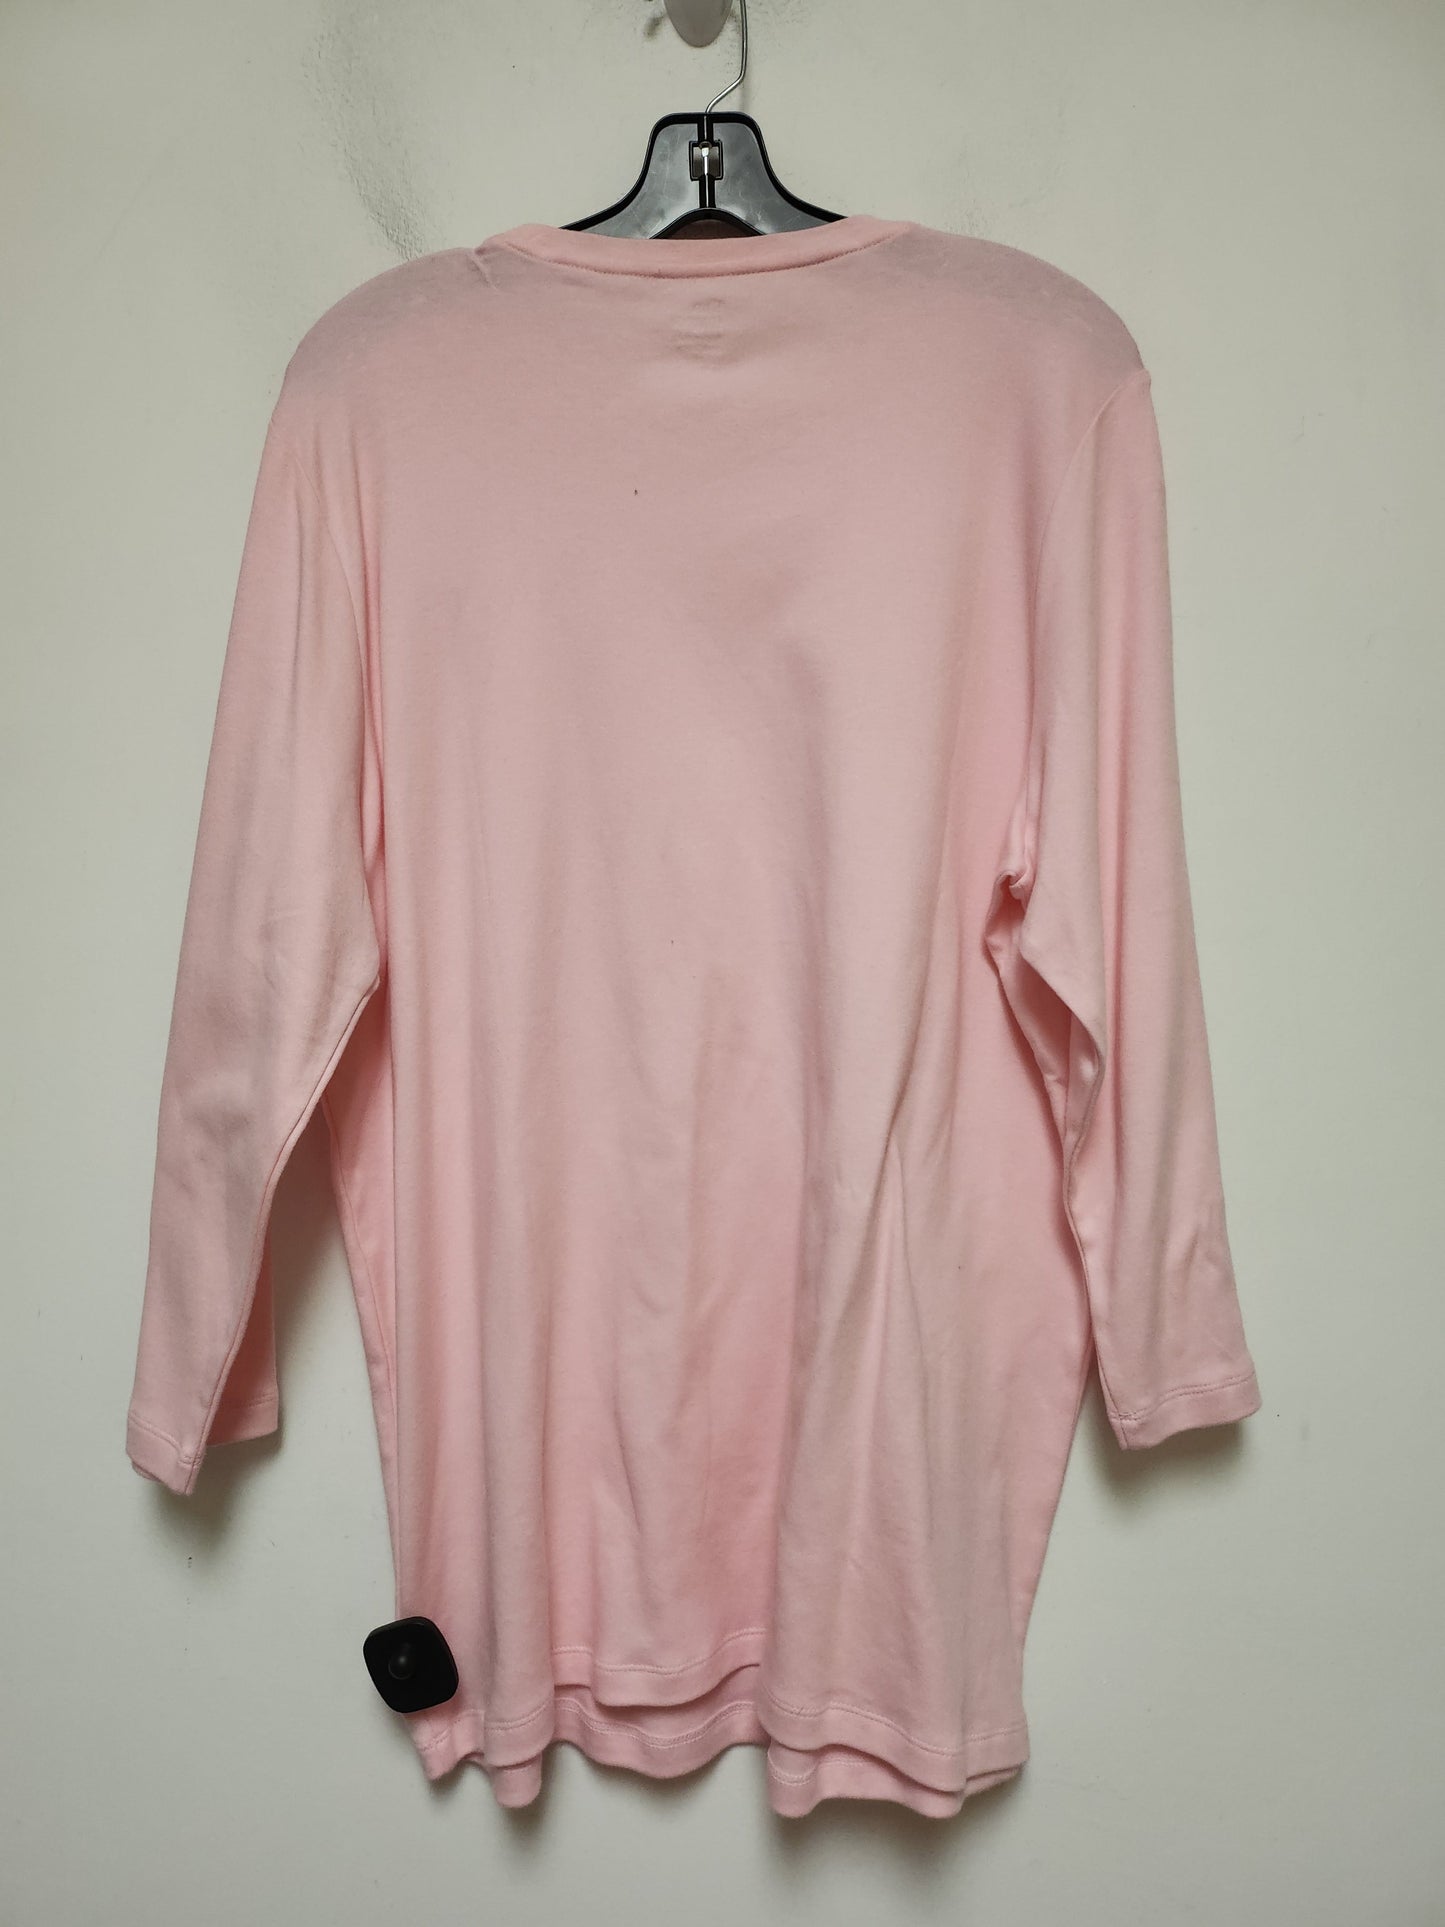 Pink Top Long Sleeve Basic Kim Rogers, Size 1x